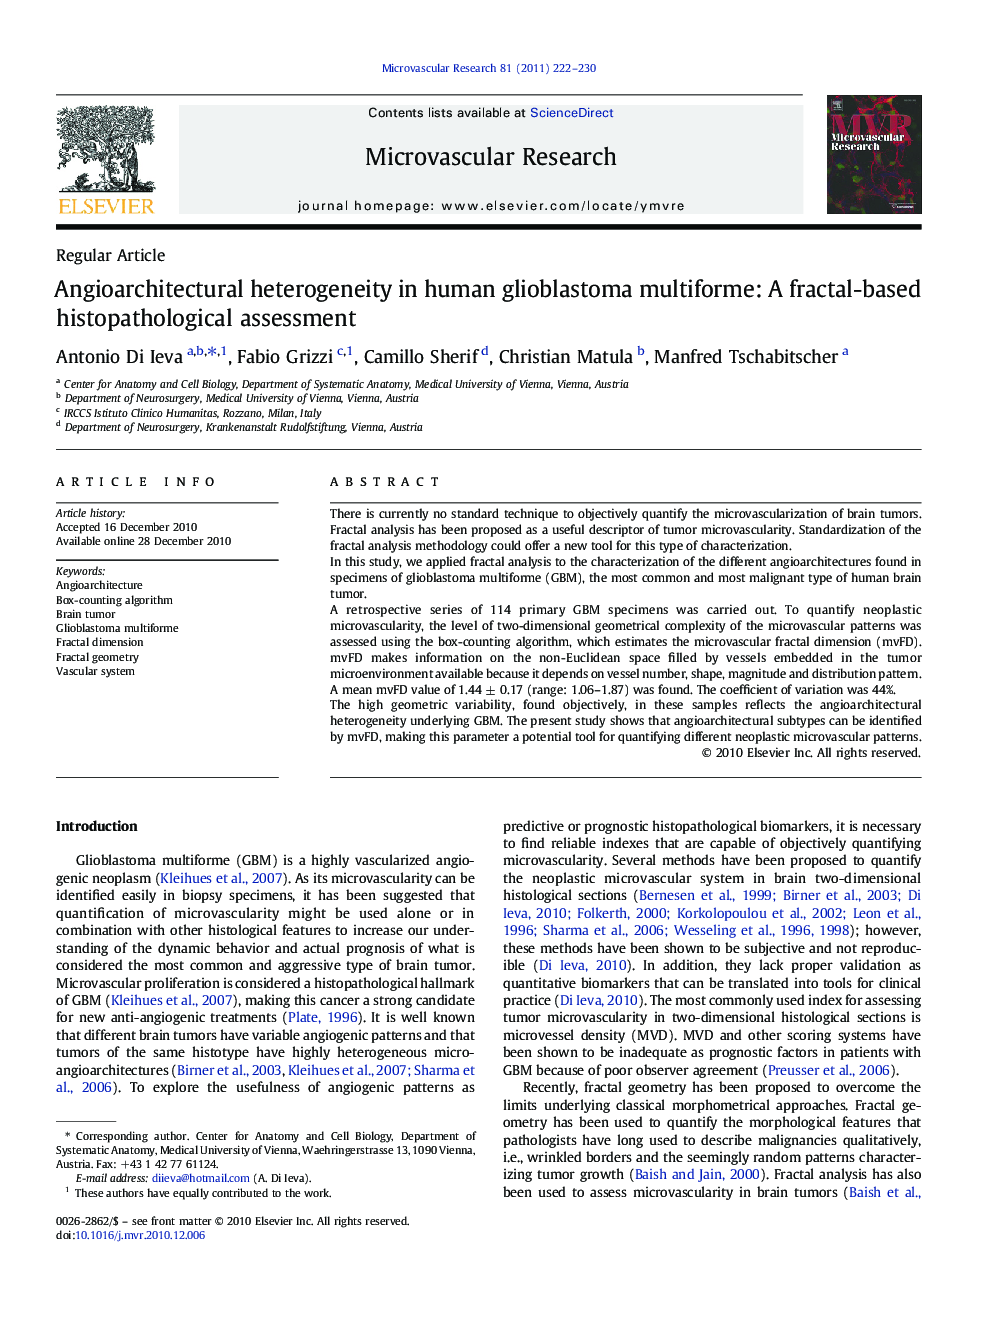 Angioarchitectural heterogeneity in human glioblastoma multiforme: A fractal-based histopathological assessment